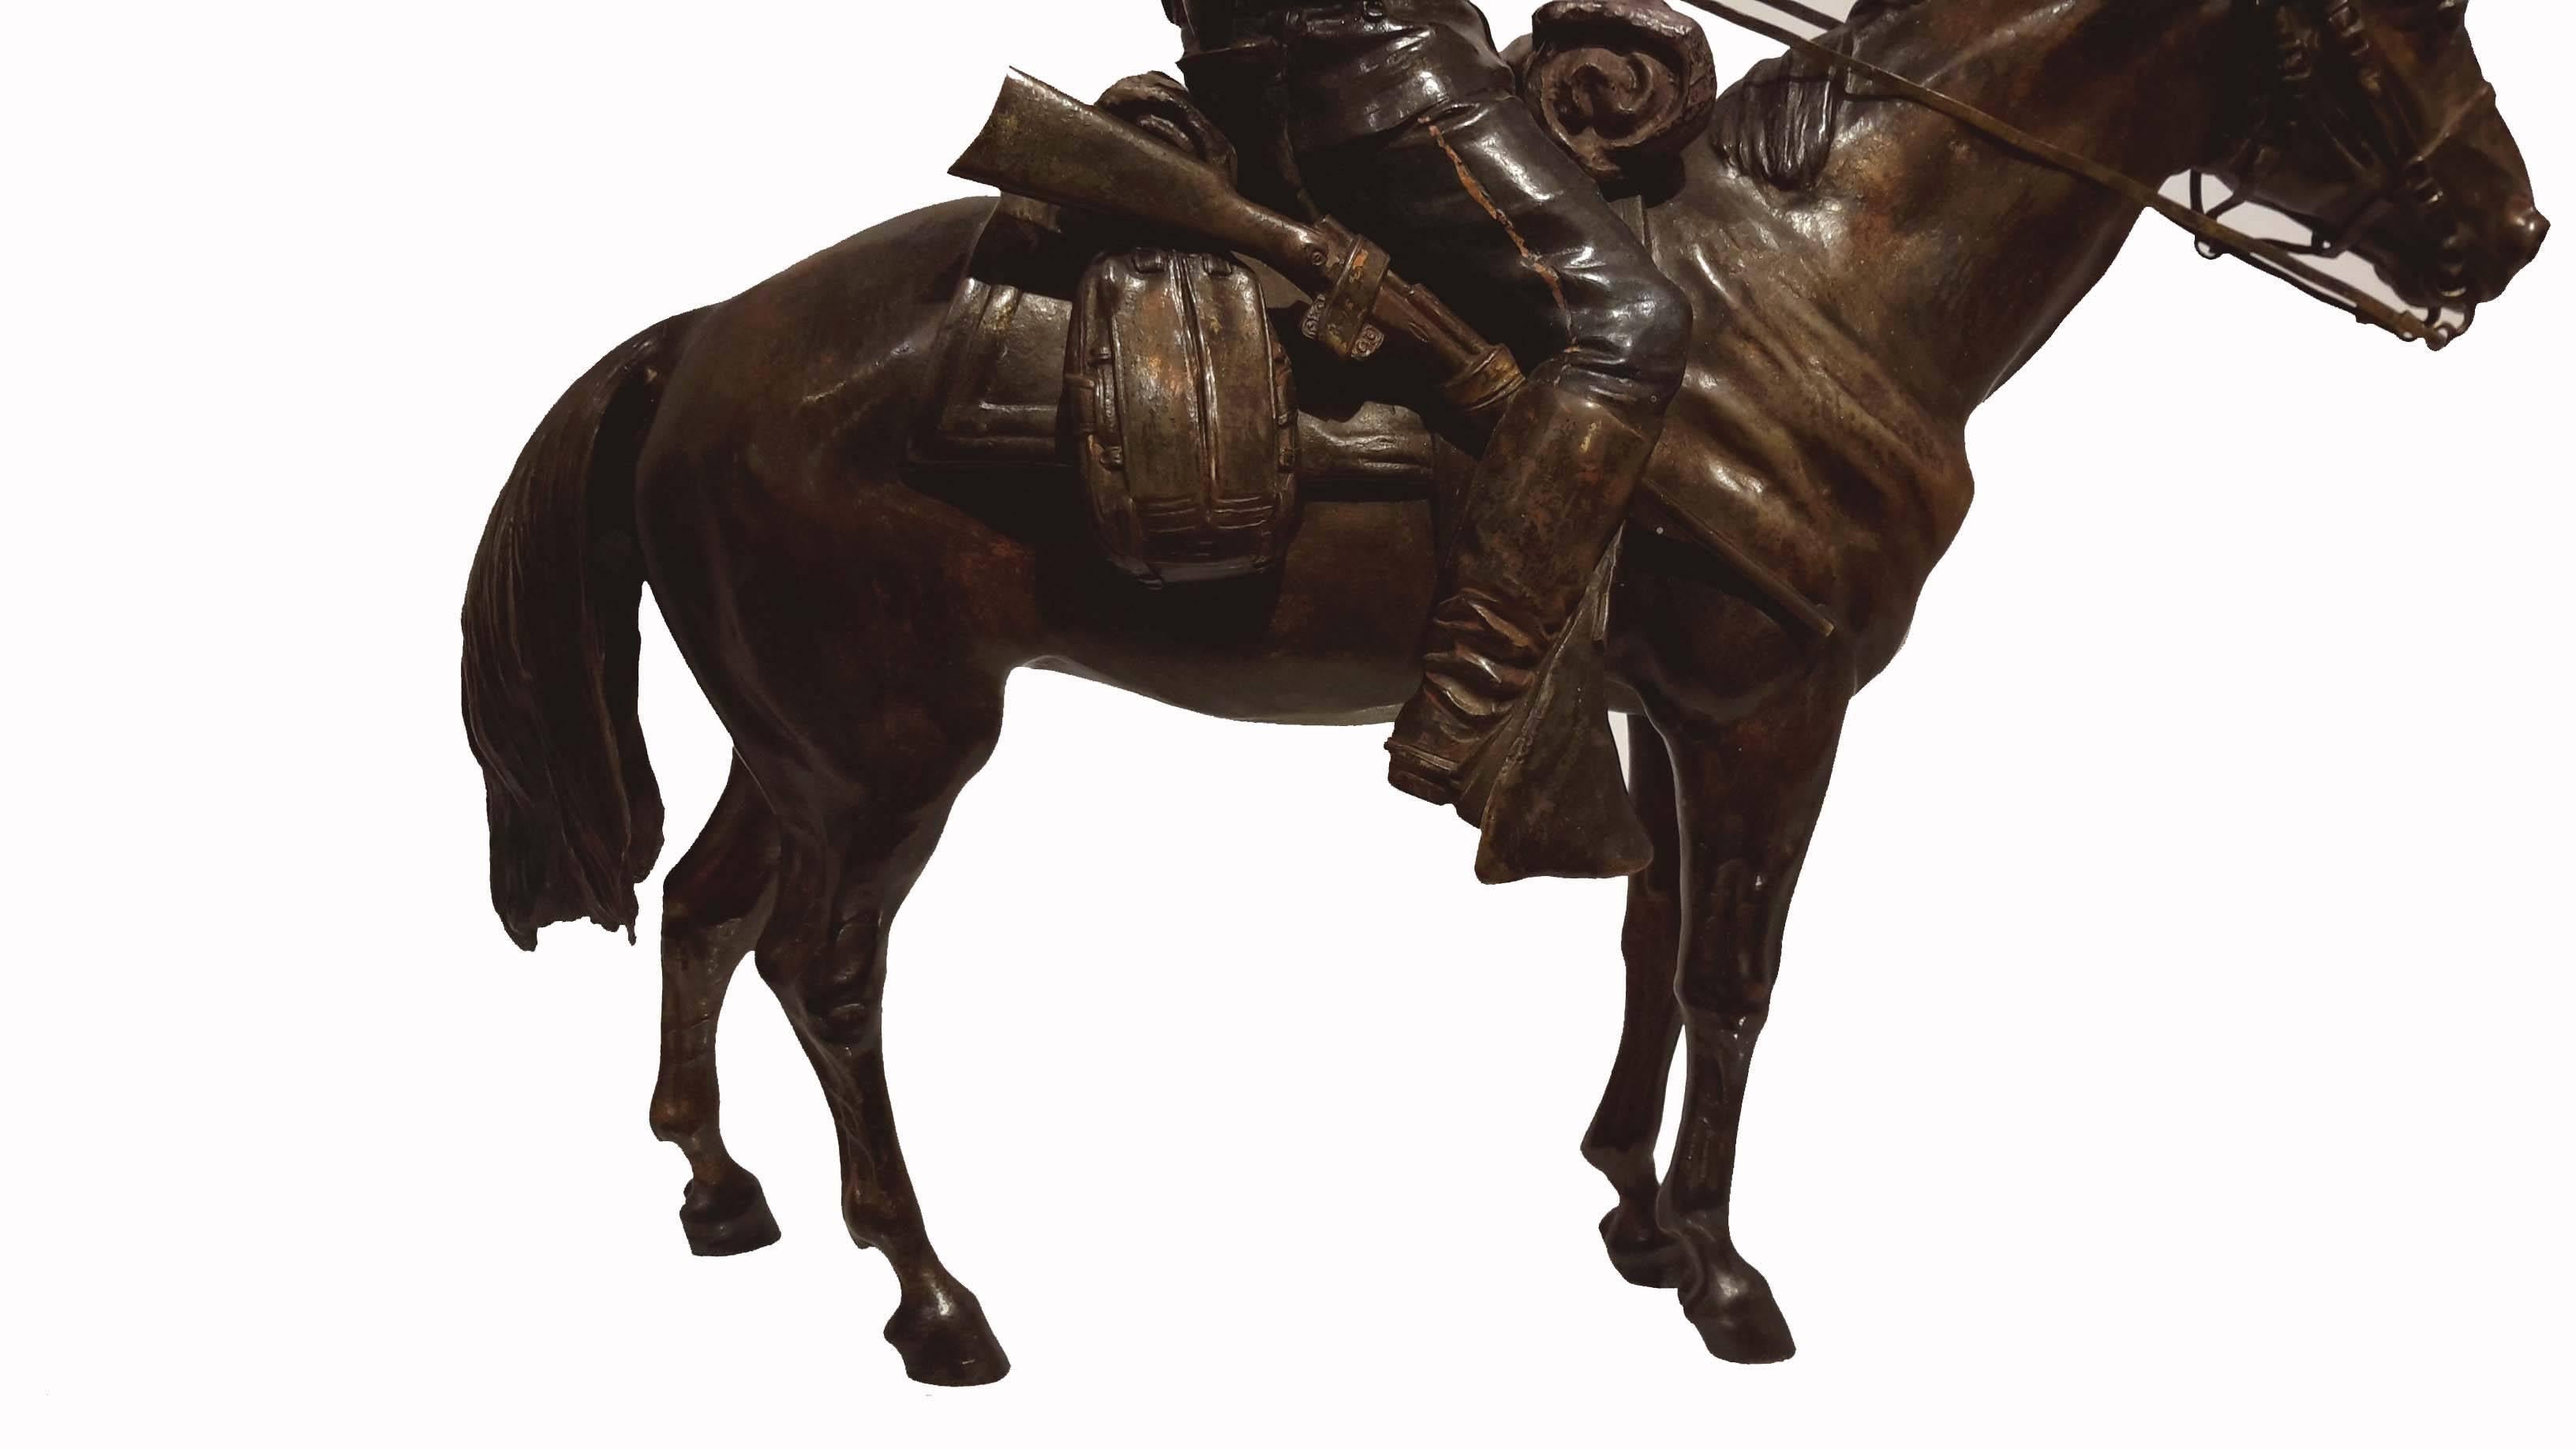 Polychromed Carl Kauba, Poly-Chromed Bronze U.S. Soldier on Horse, circa 1900